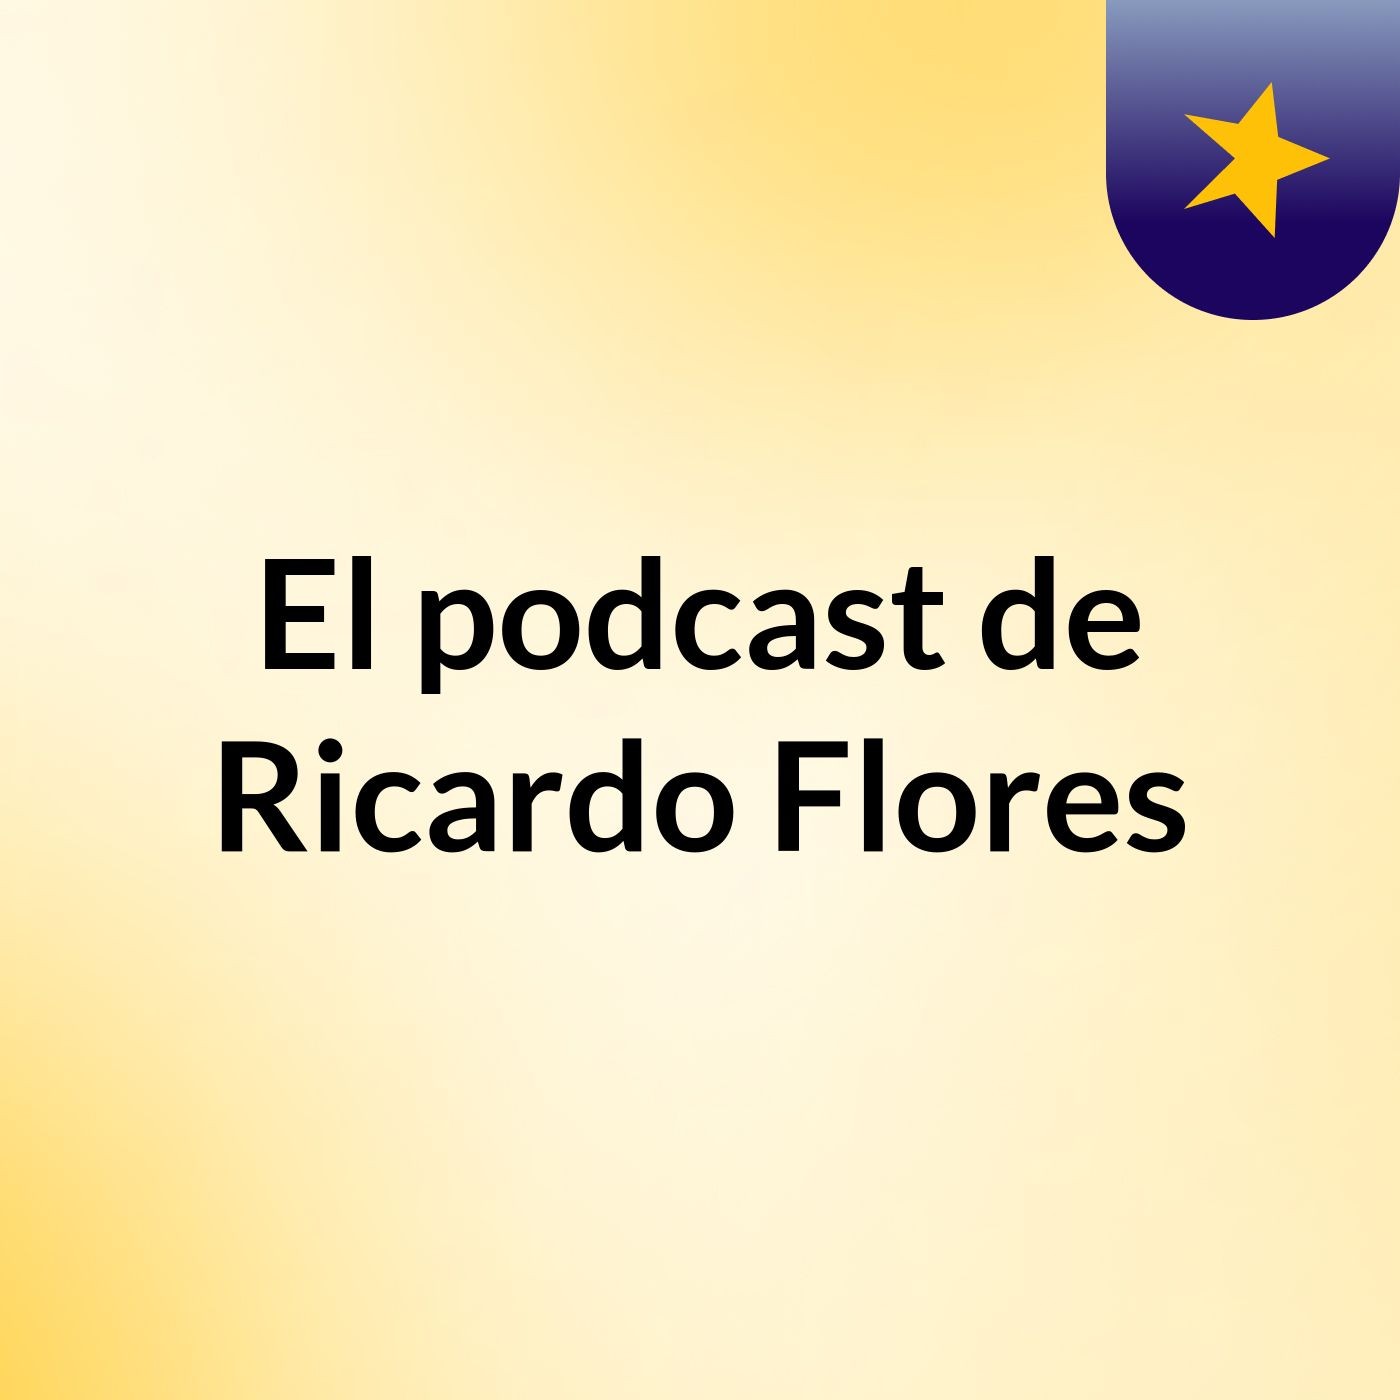 El podcast de Ricardo Flores